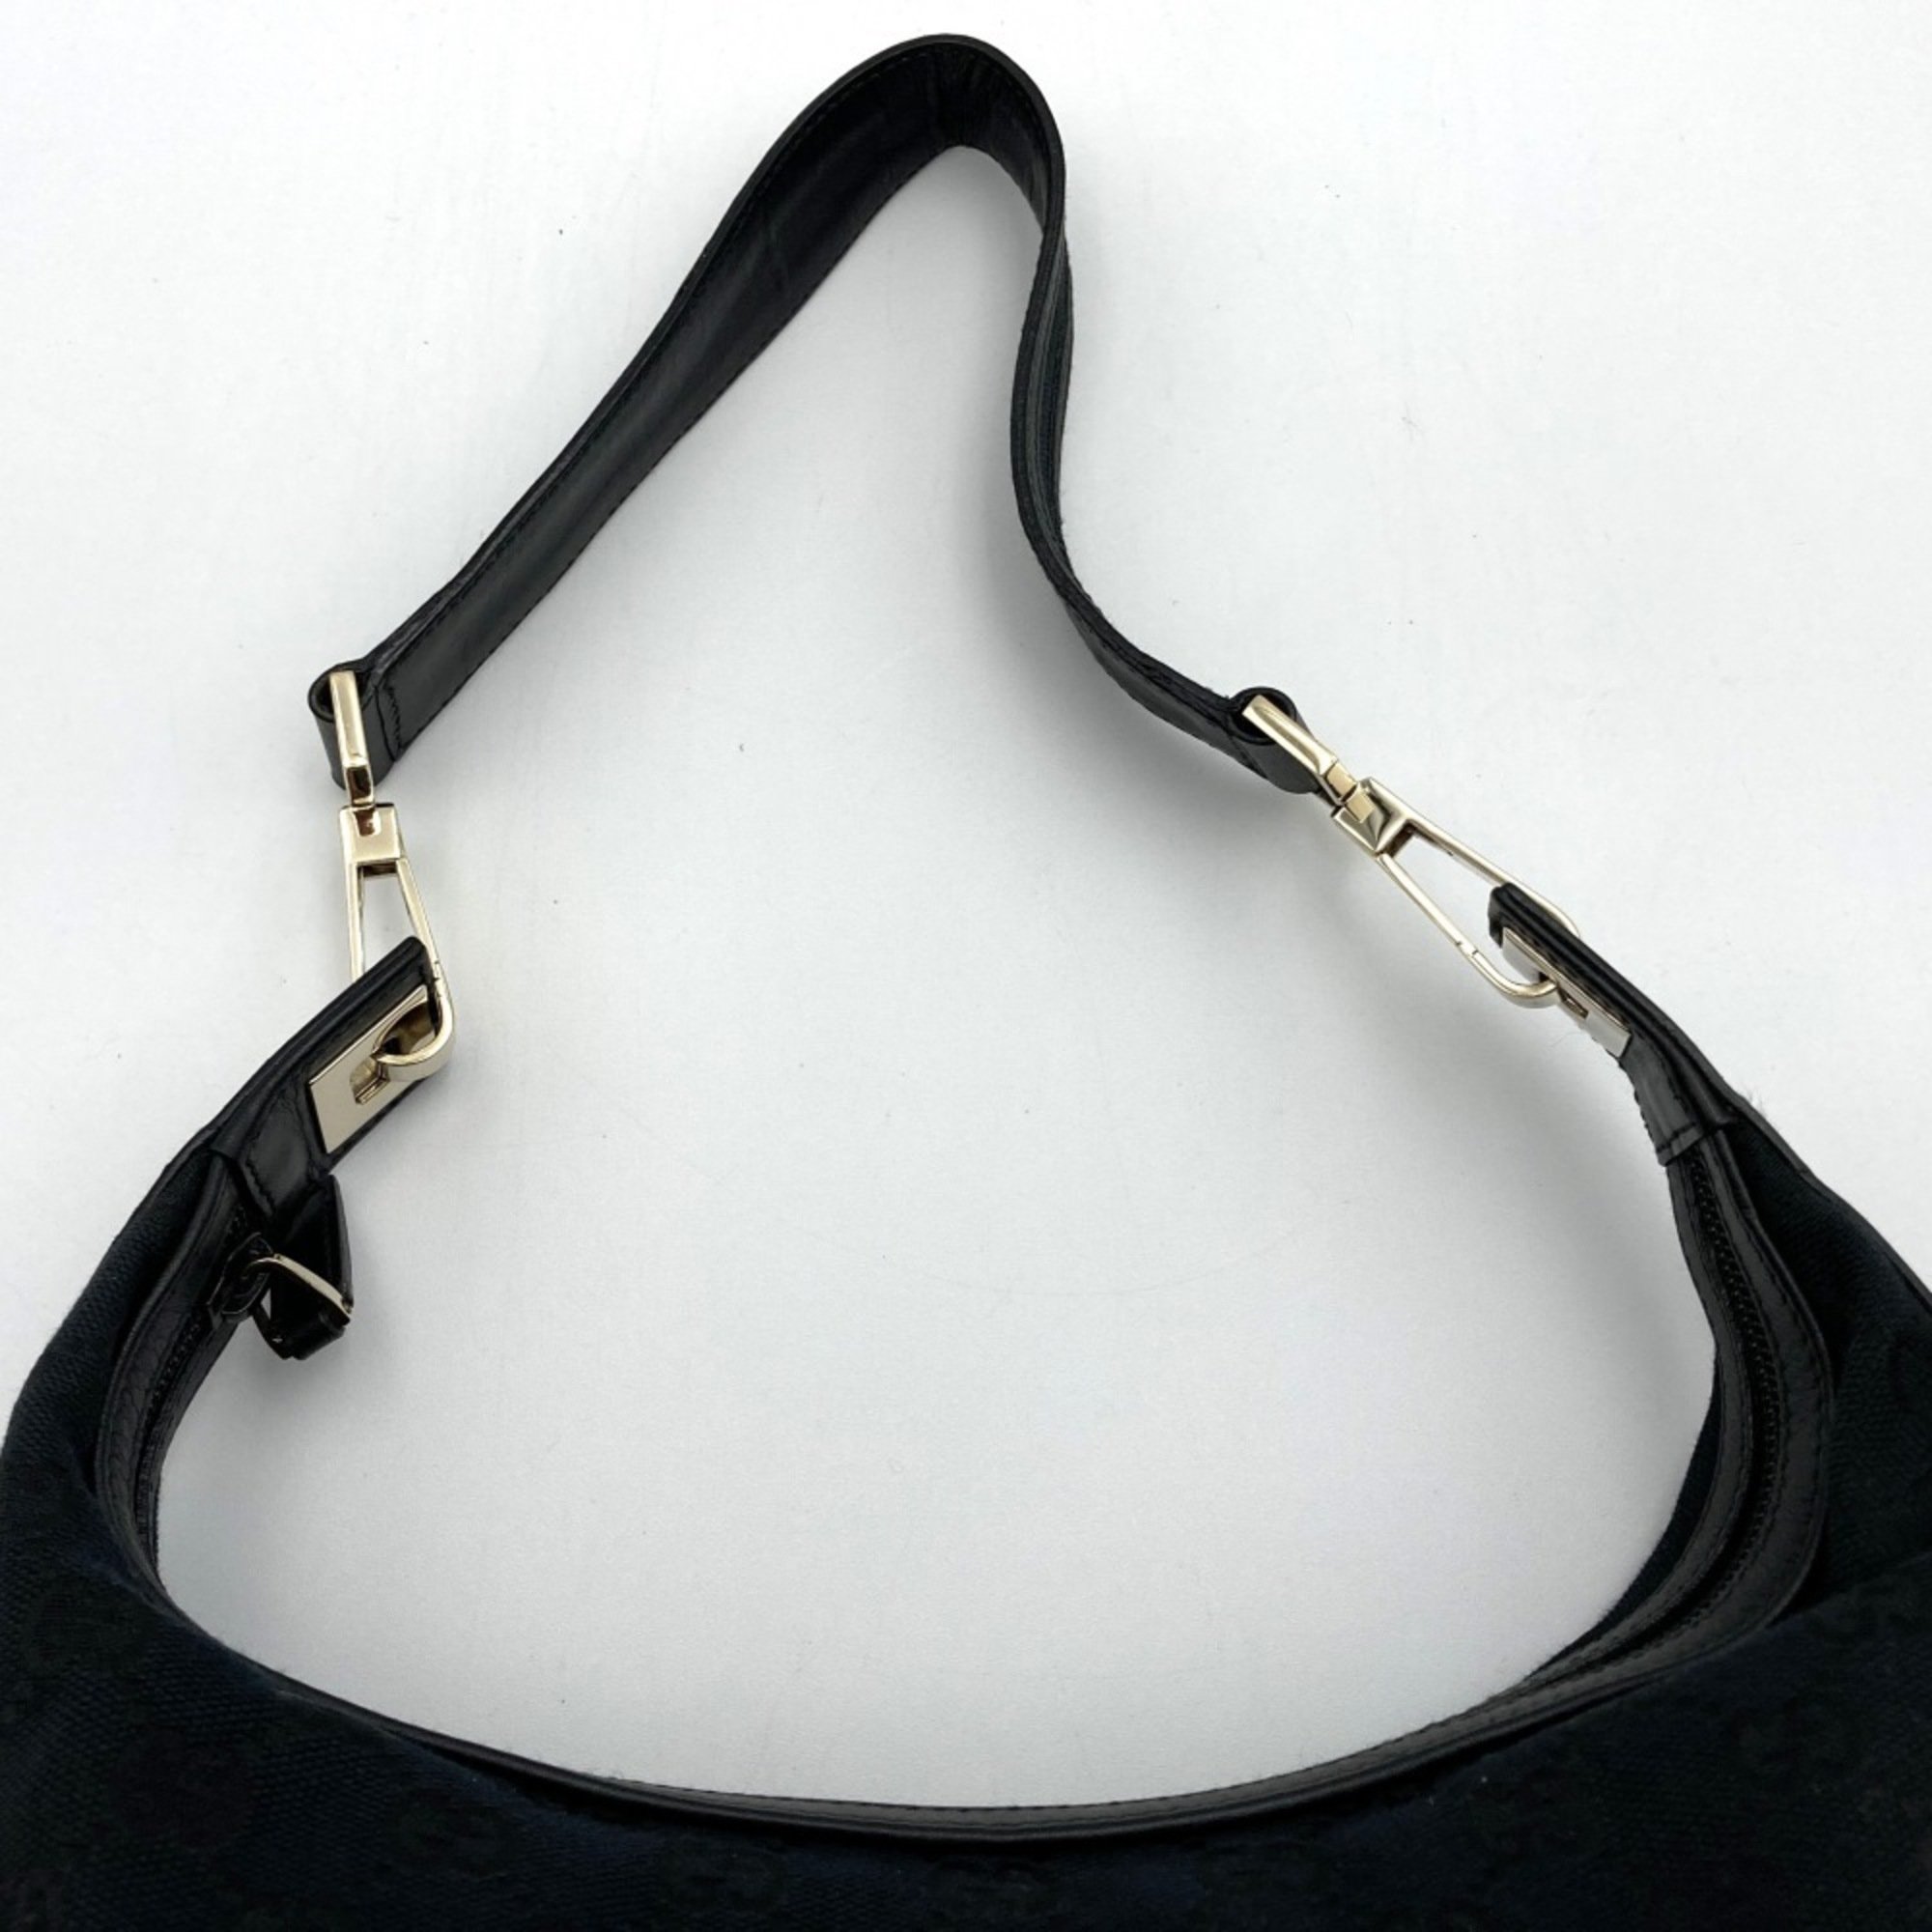 GUCCI 001 4264 Shoulder Bag, Black, GG Canvas, Women's Fashion